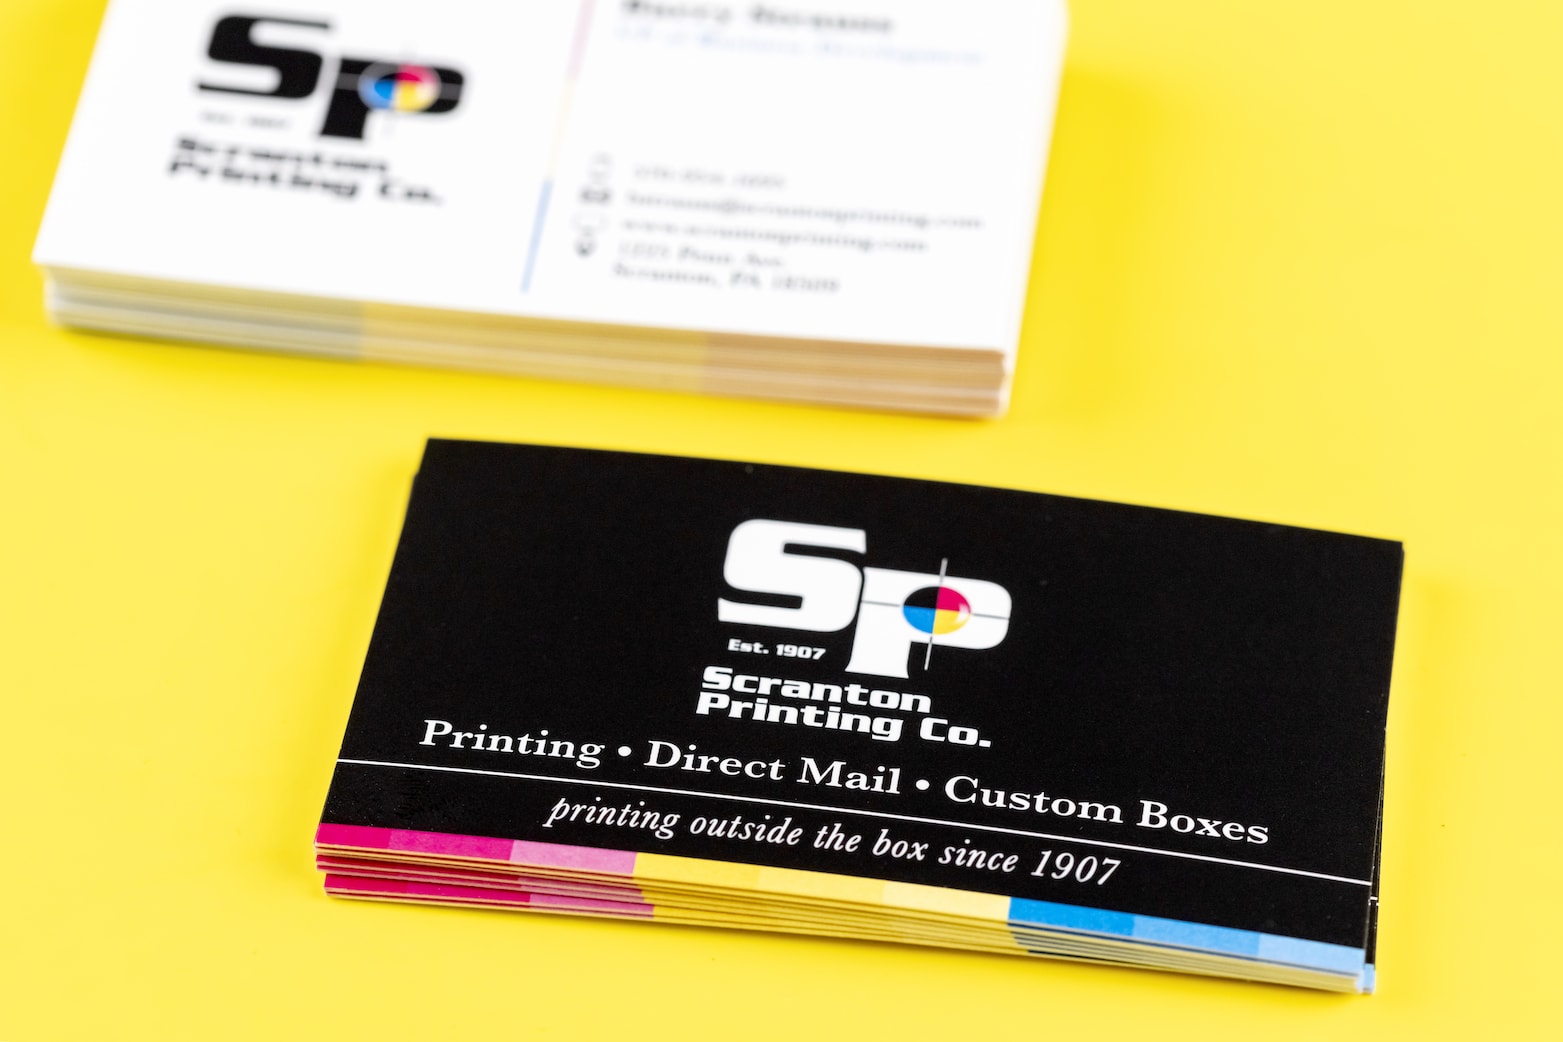 Business Cards - Scranton Printing Co.